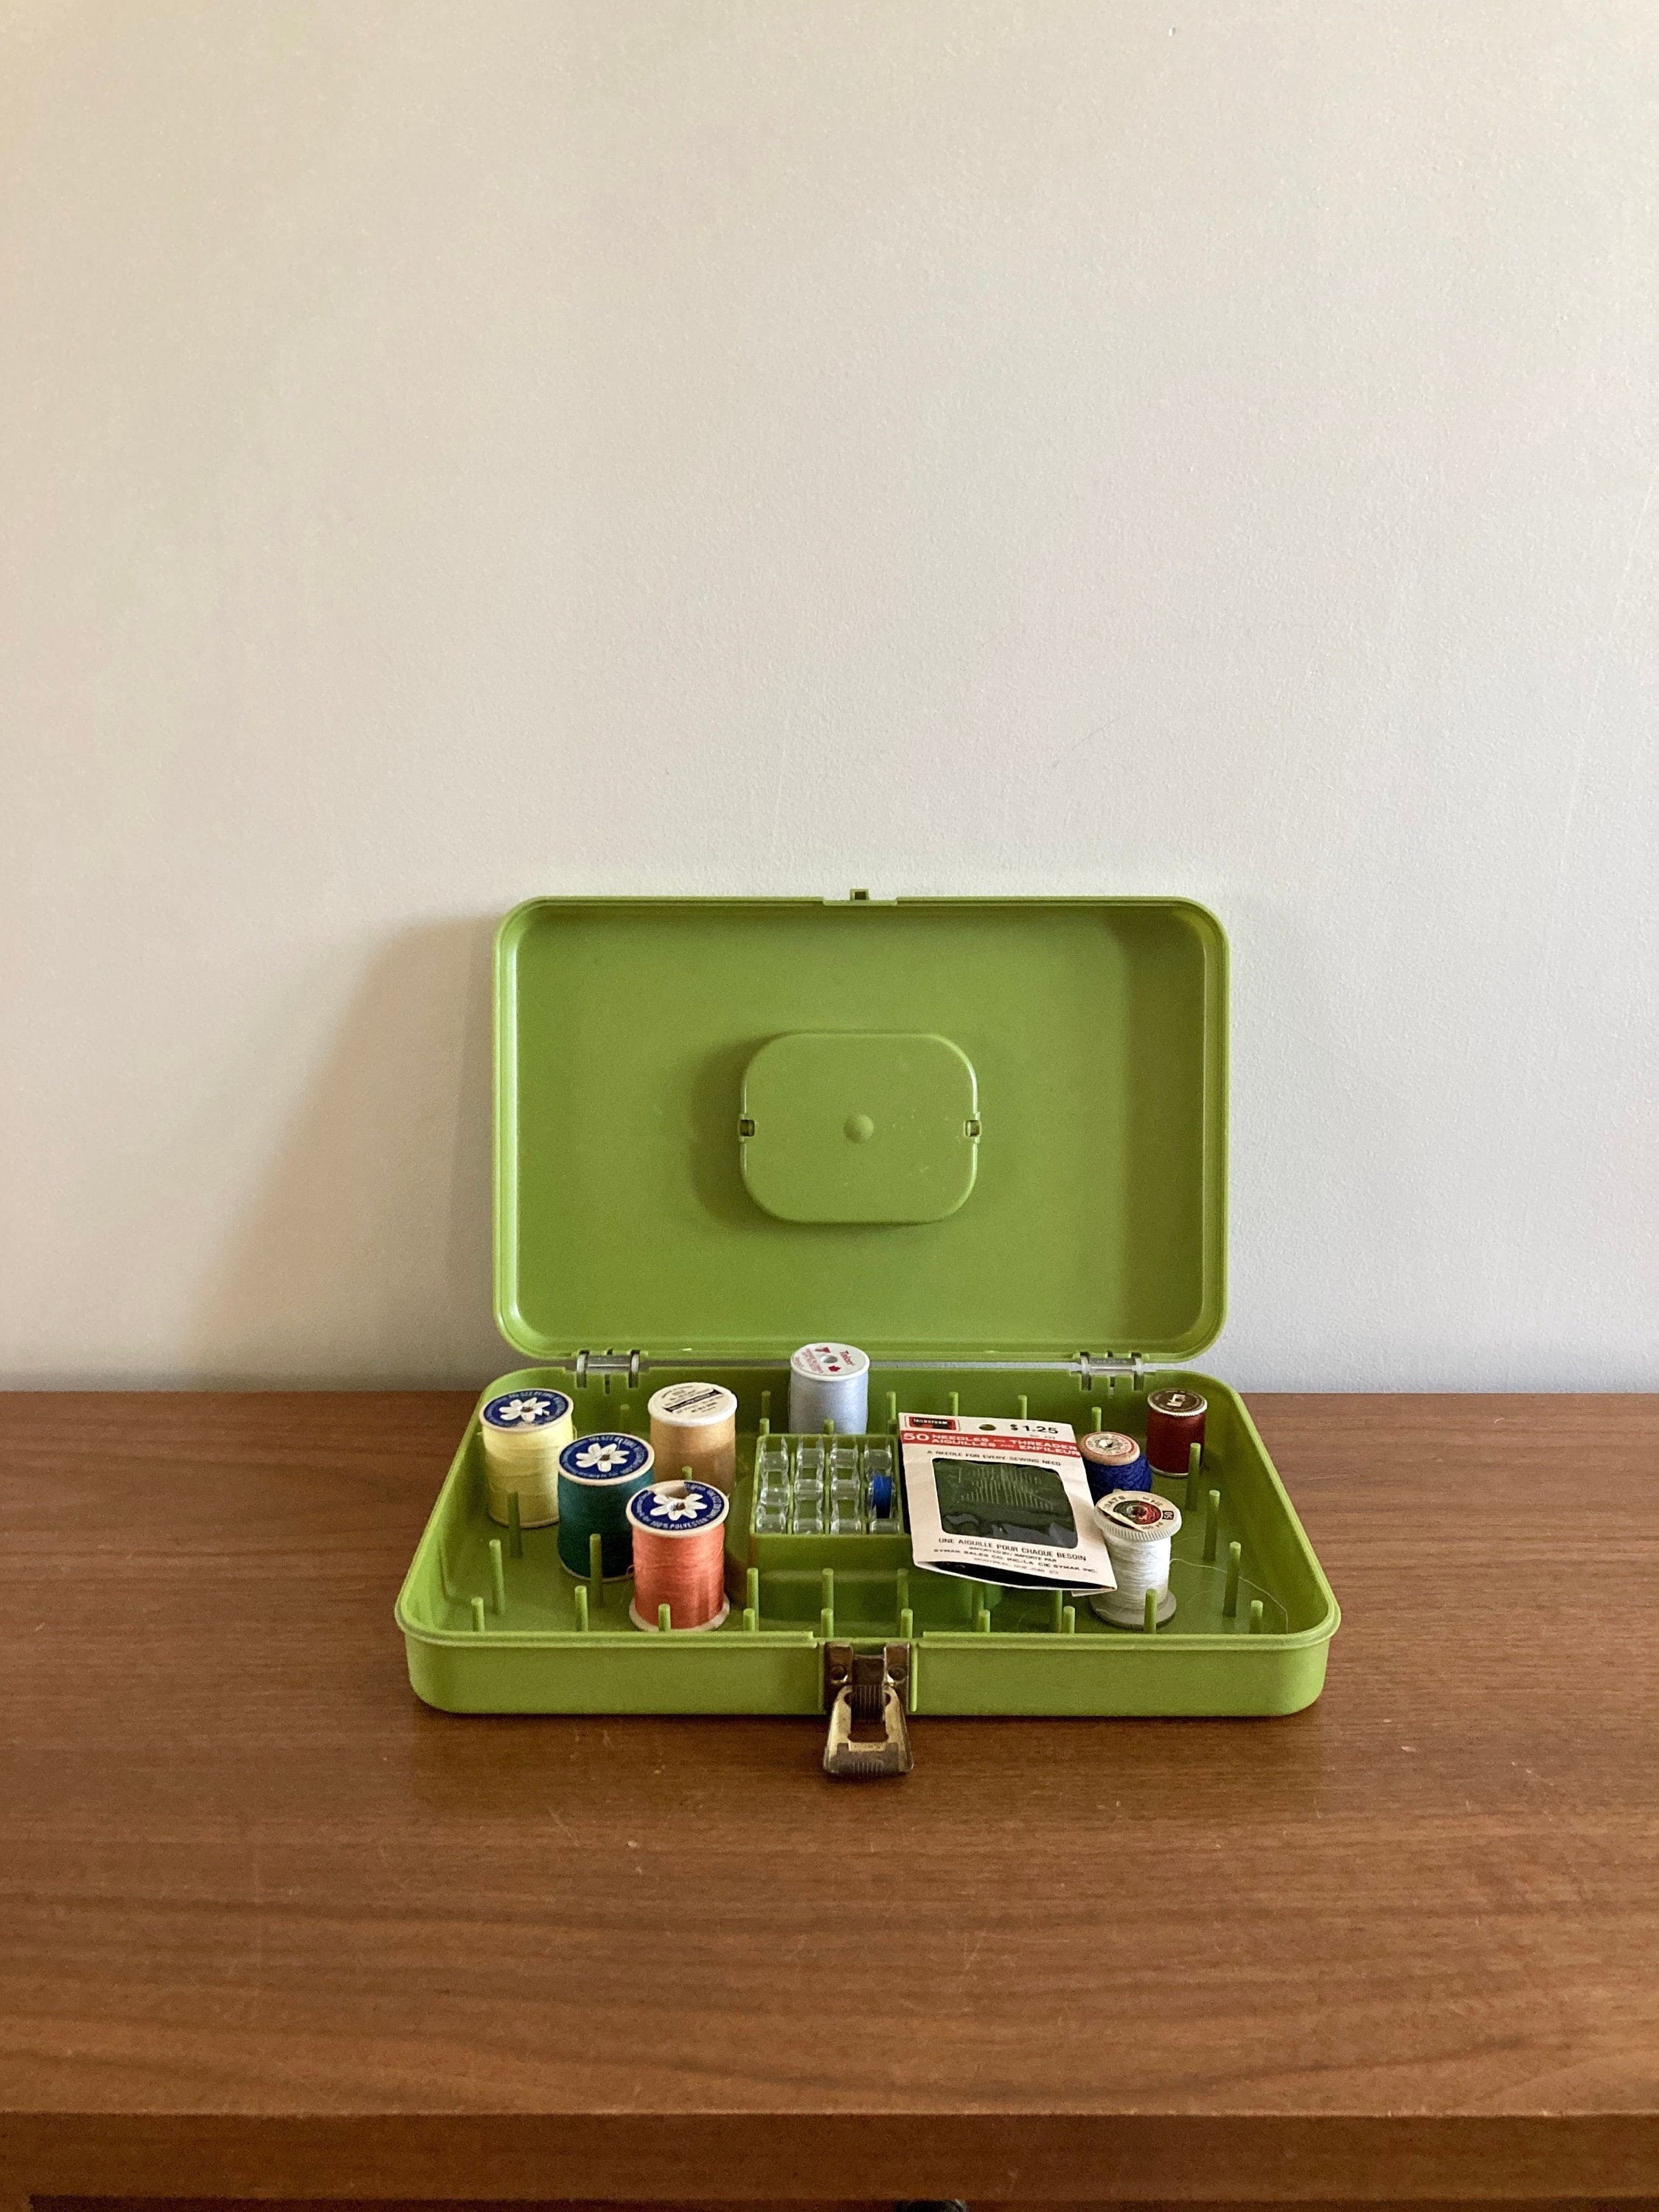 Articulated Sewing Box – Classy Mod LLC